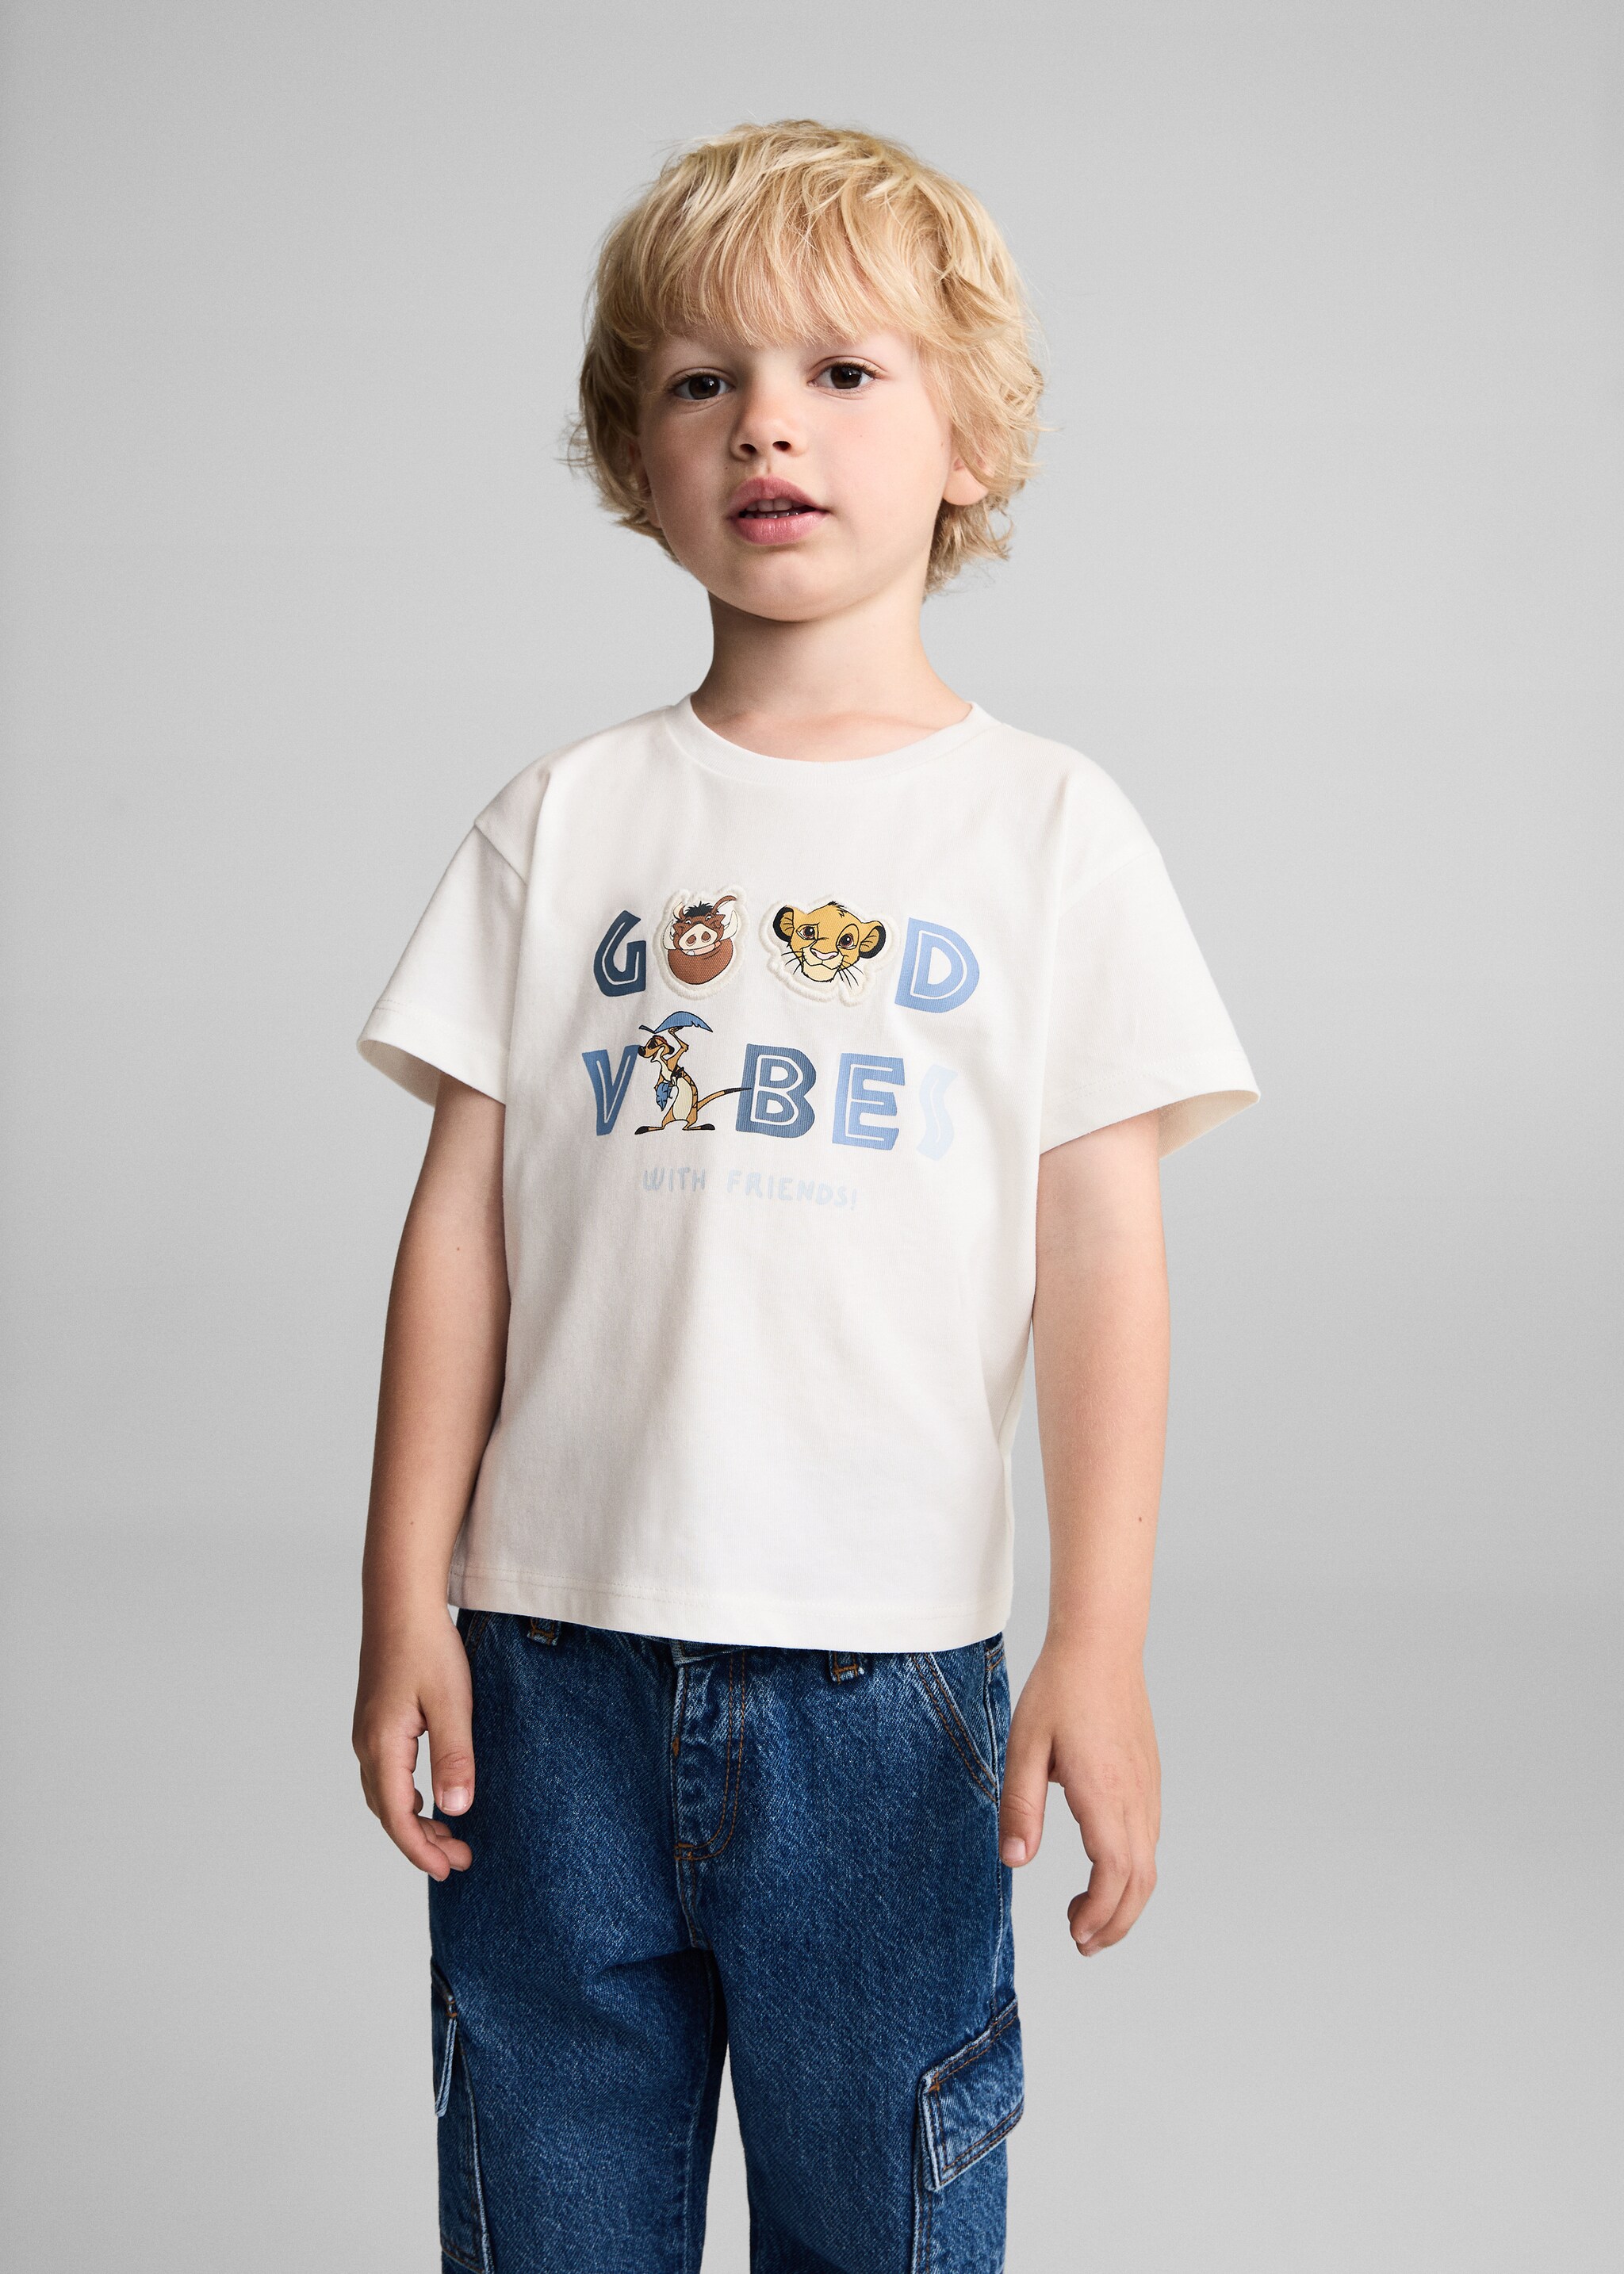 The Lion King t-shirt - Середній план